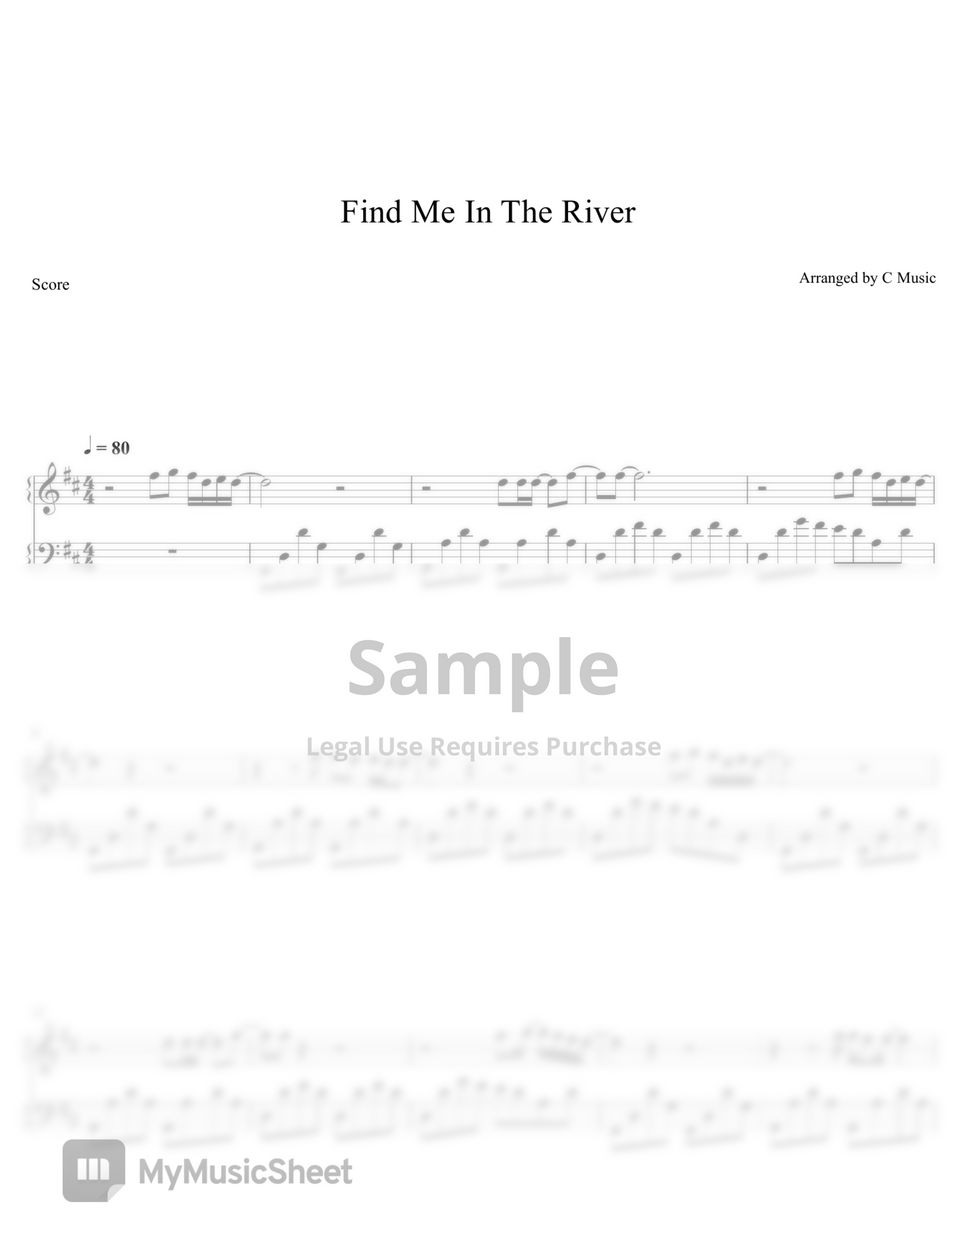 KJ Apa & JJ Heller - Find Me in the River by C Music